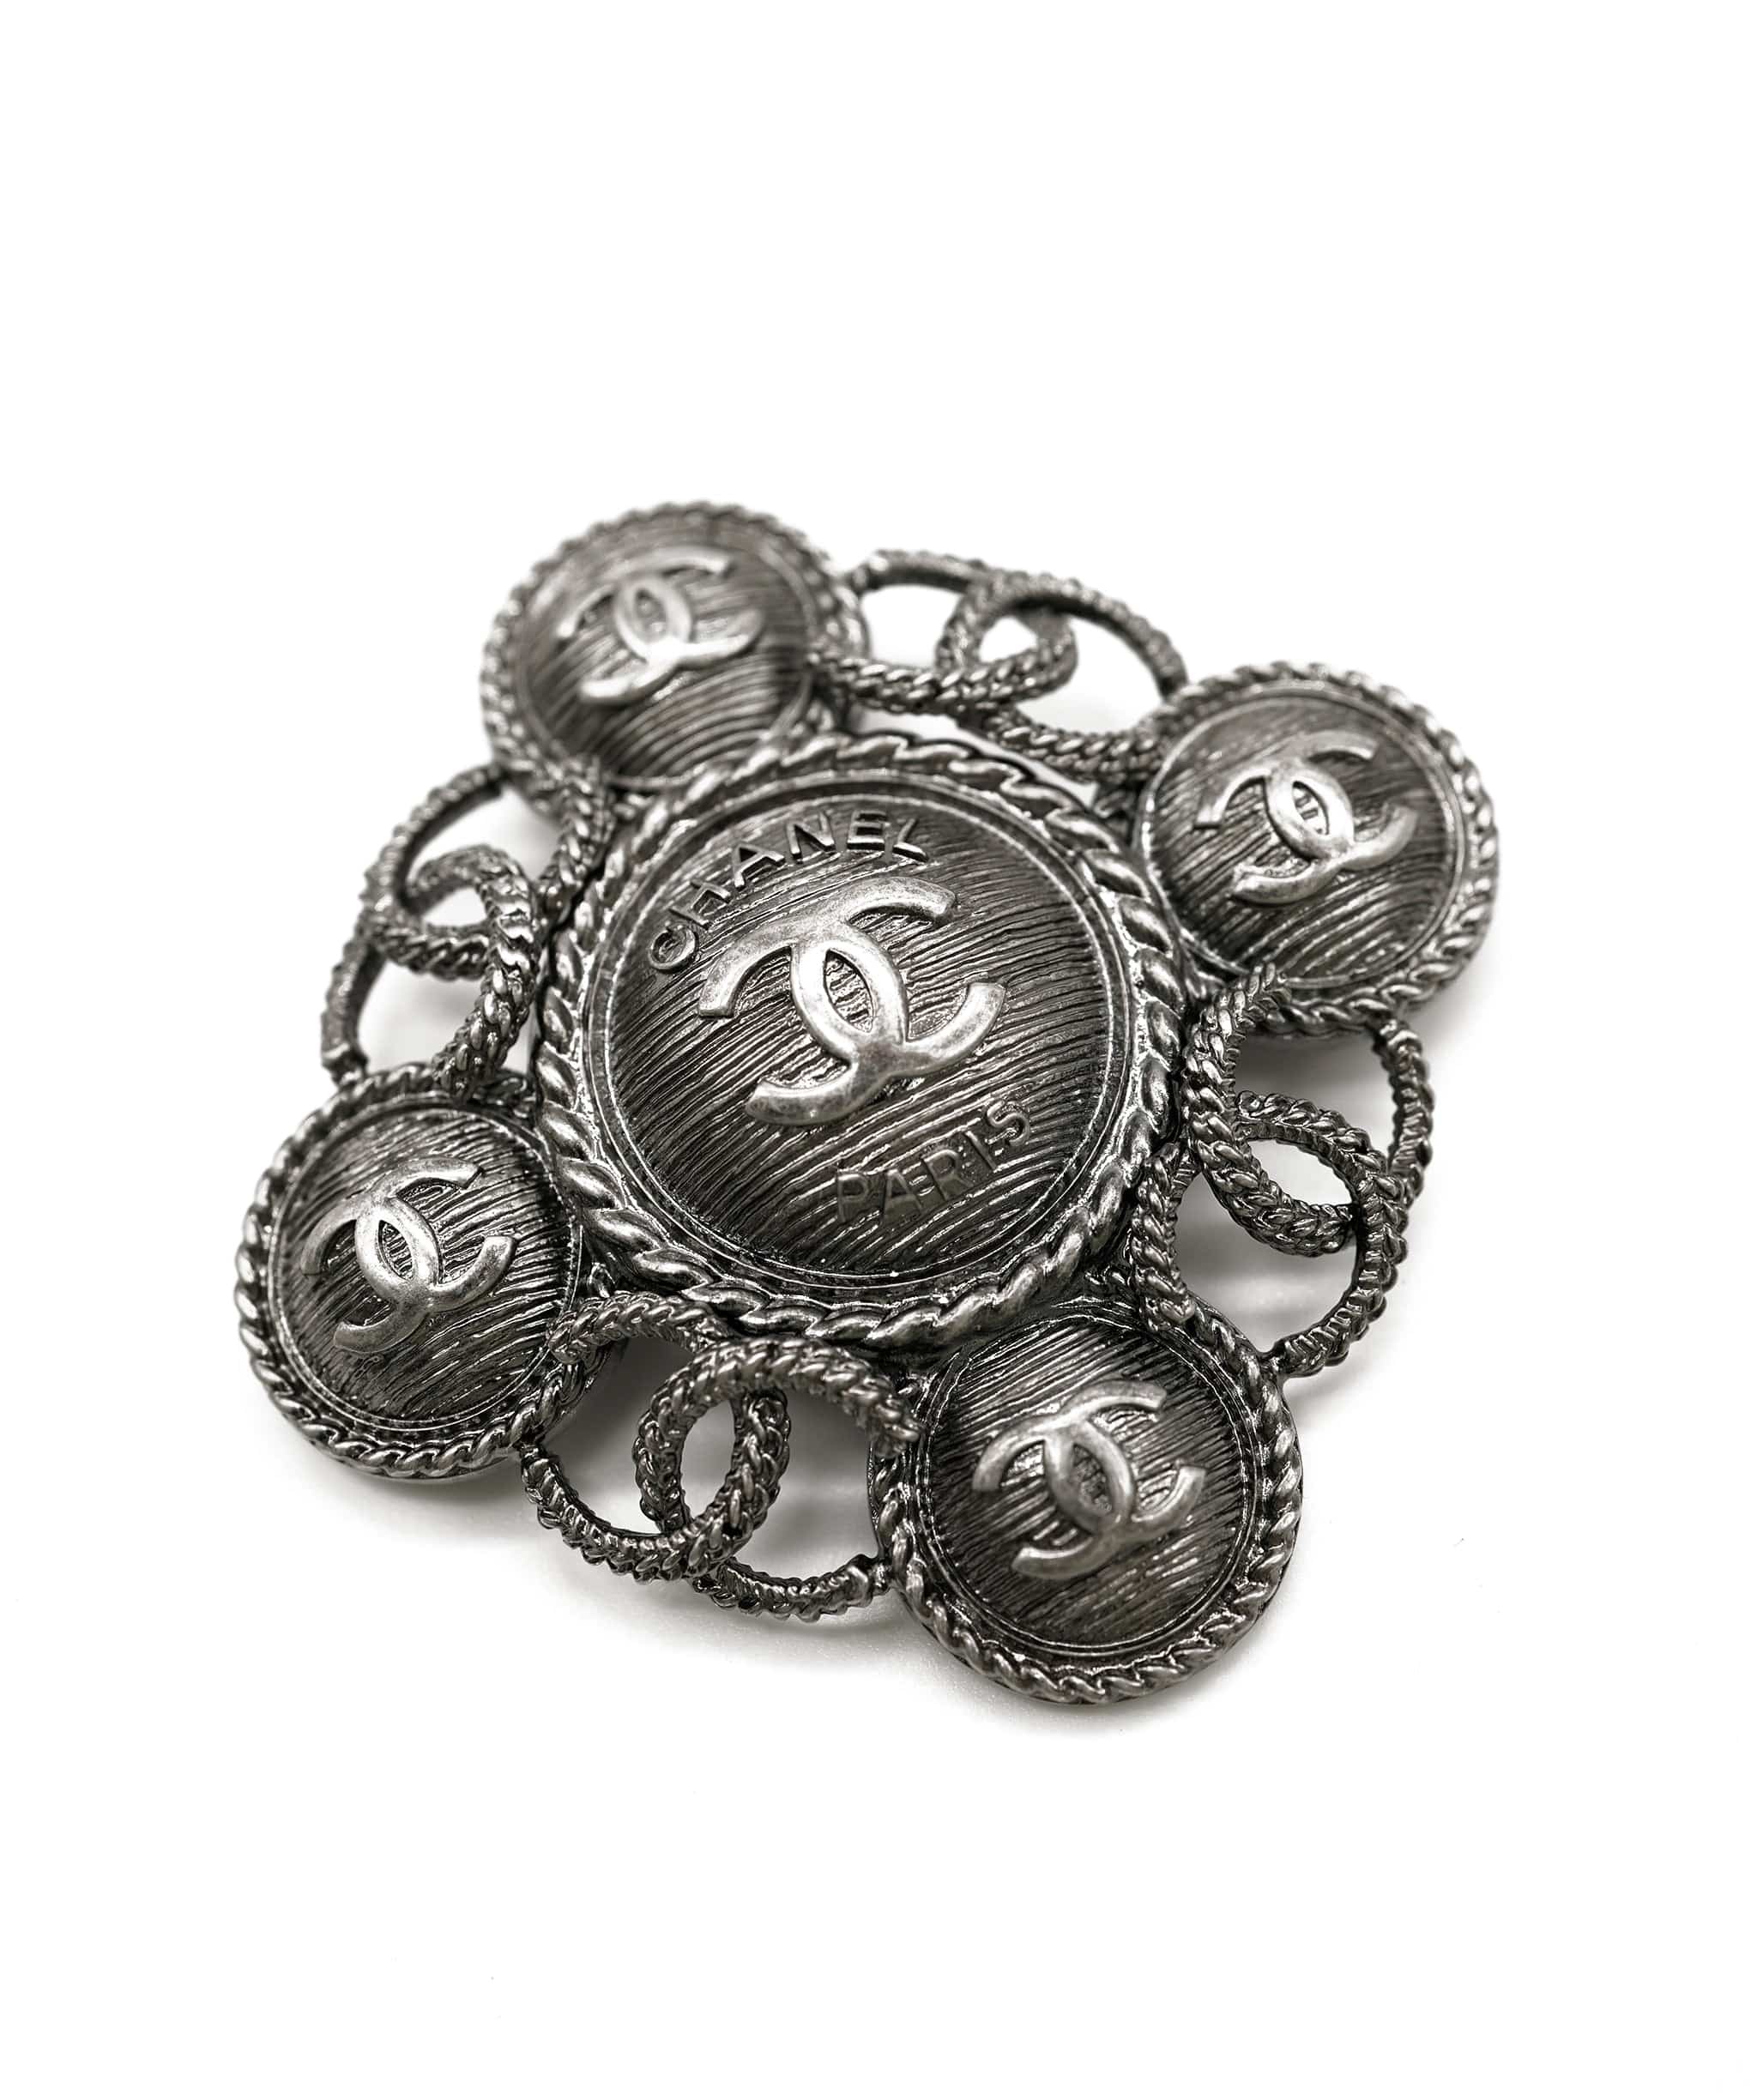 Chanel Chanel brooch - AWL2748